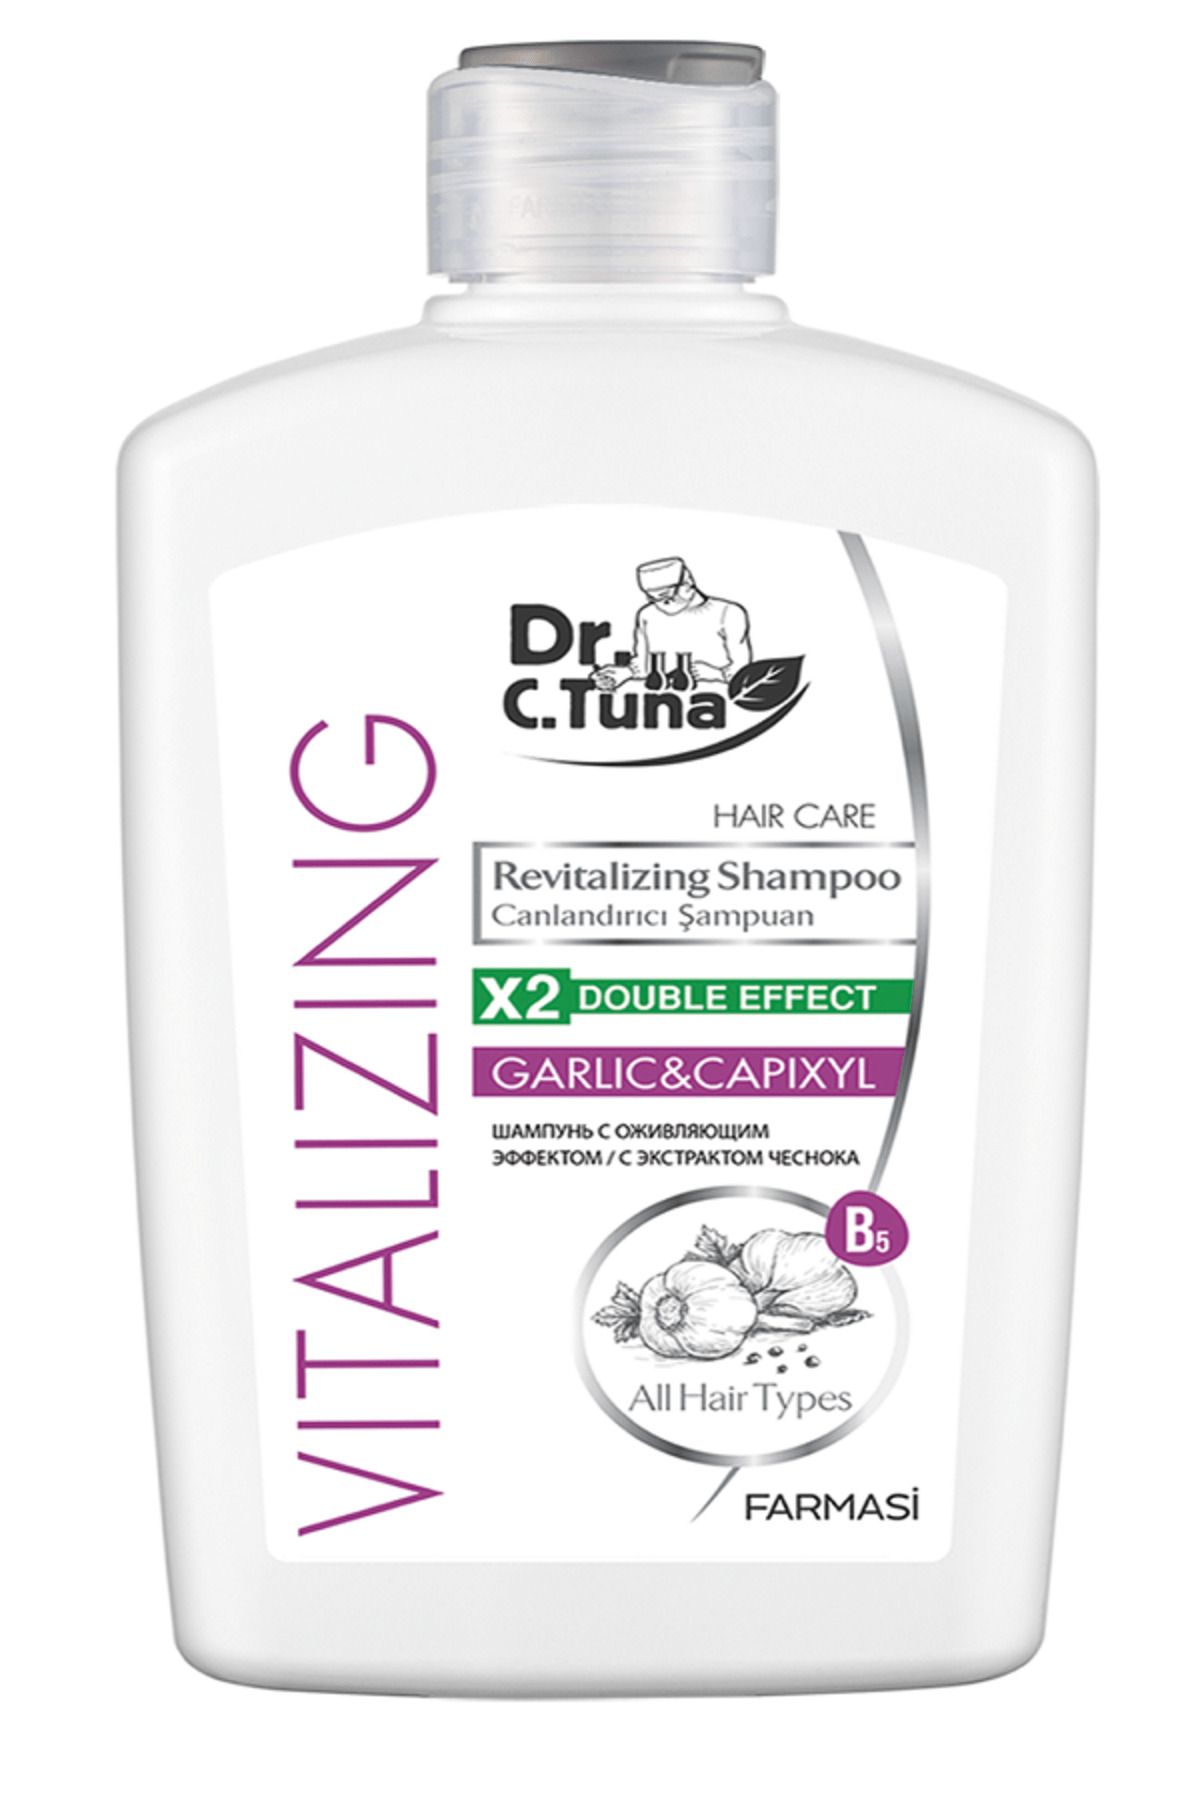 Farmasi Dr C. Tuna Vitalizing Sarımsaklı Şampuan 500 Ml1108062